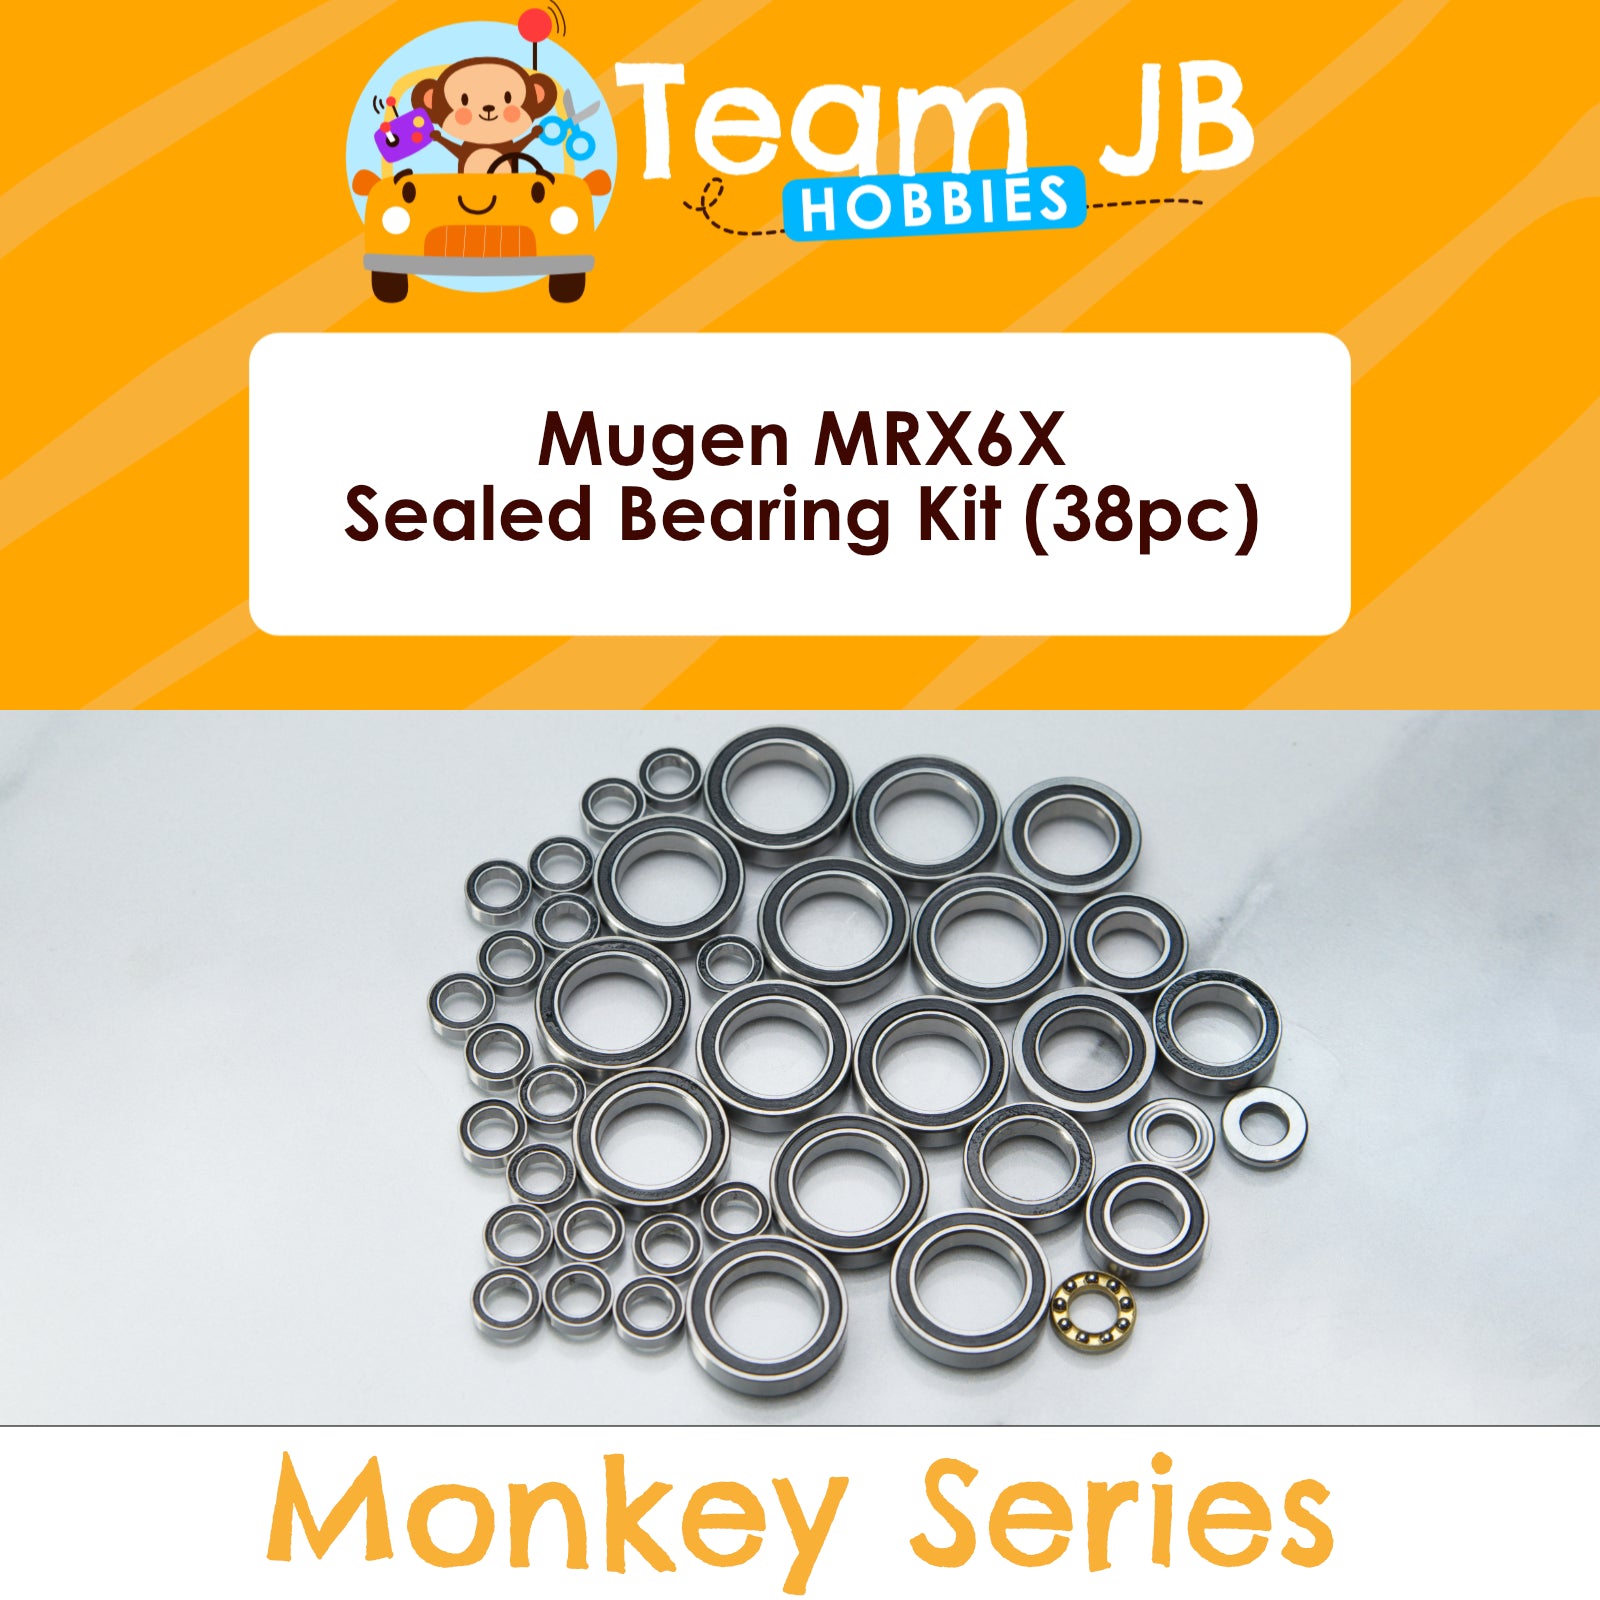 Mugen MRX6X - Sealed Bearing Kit